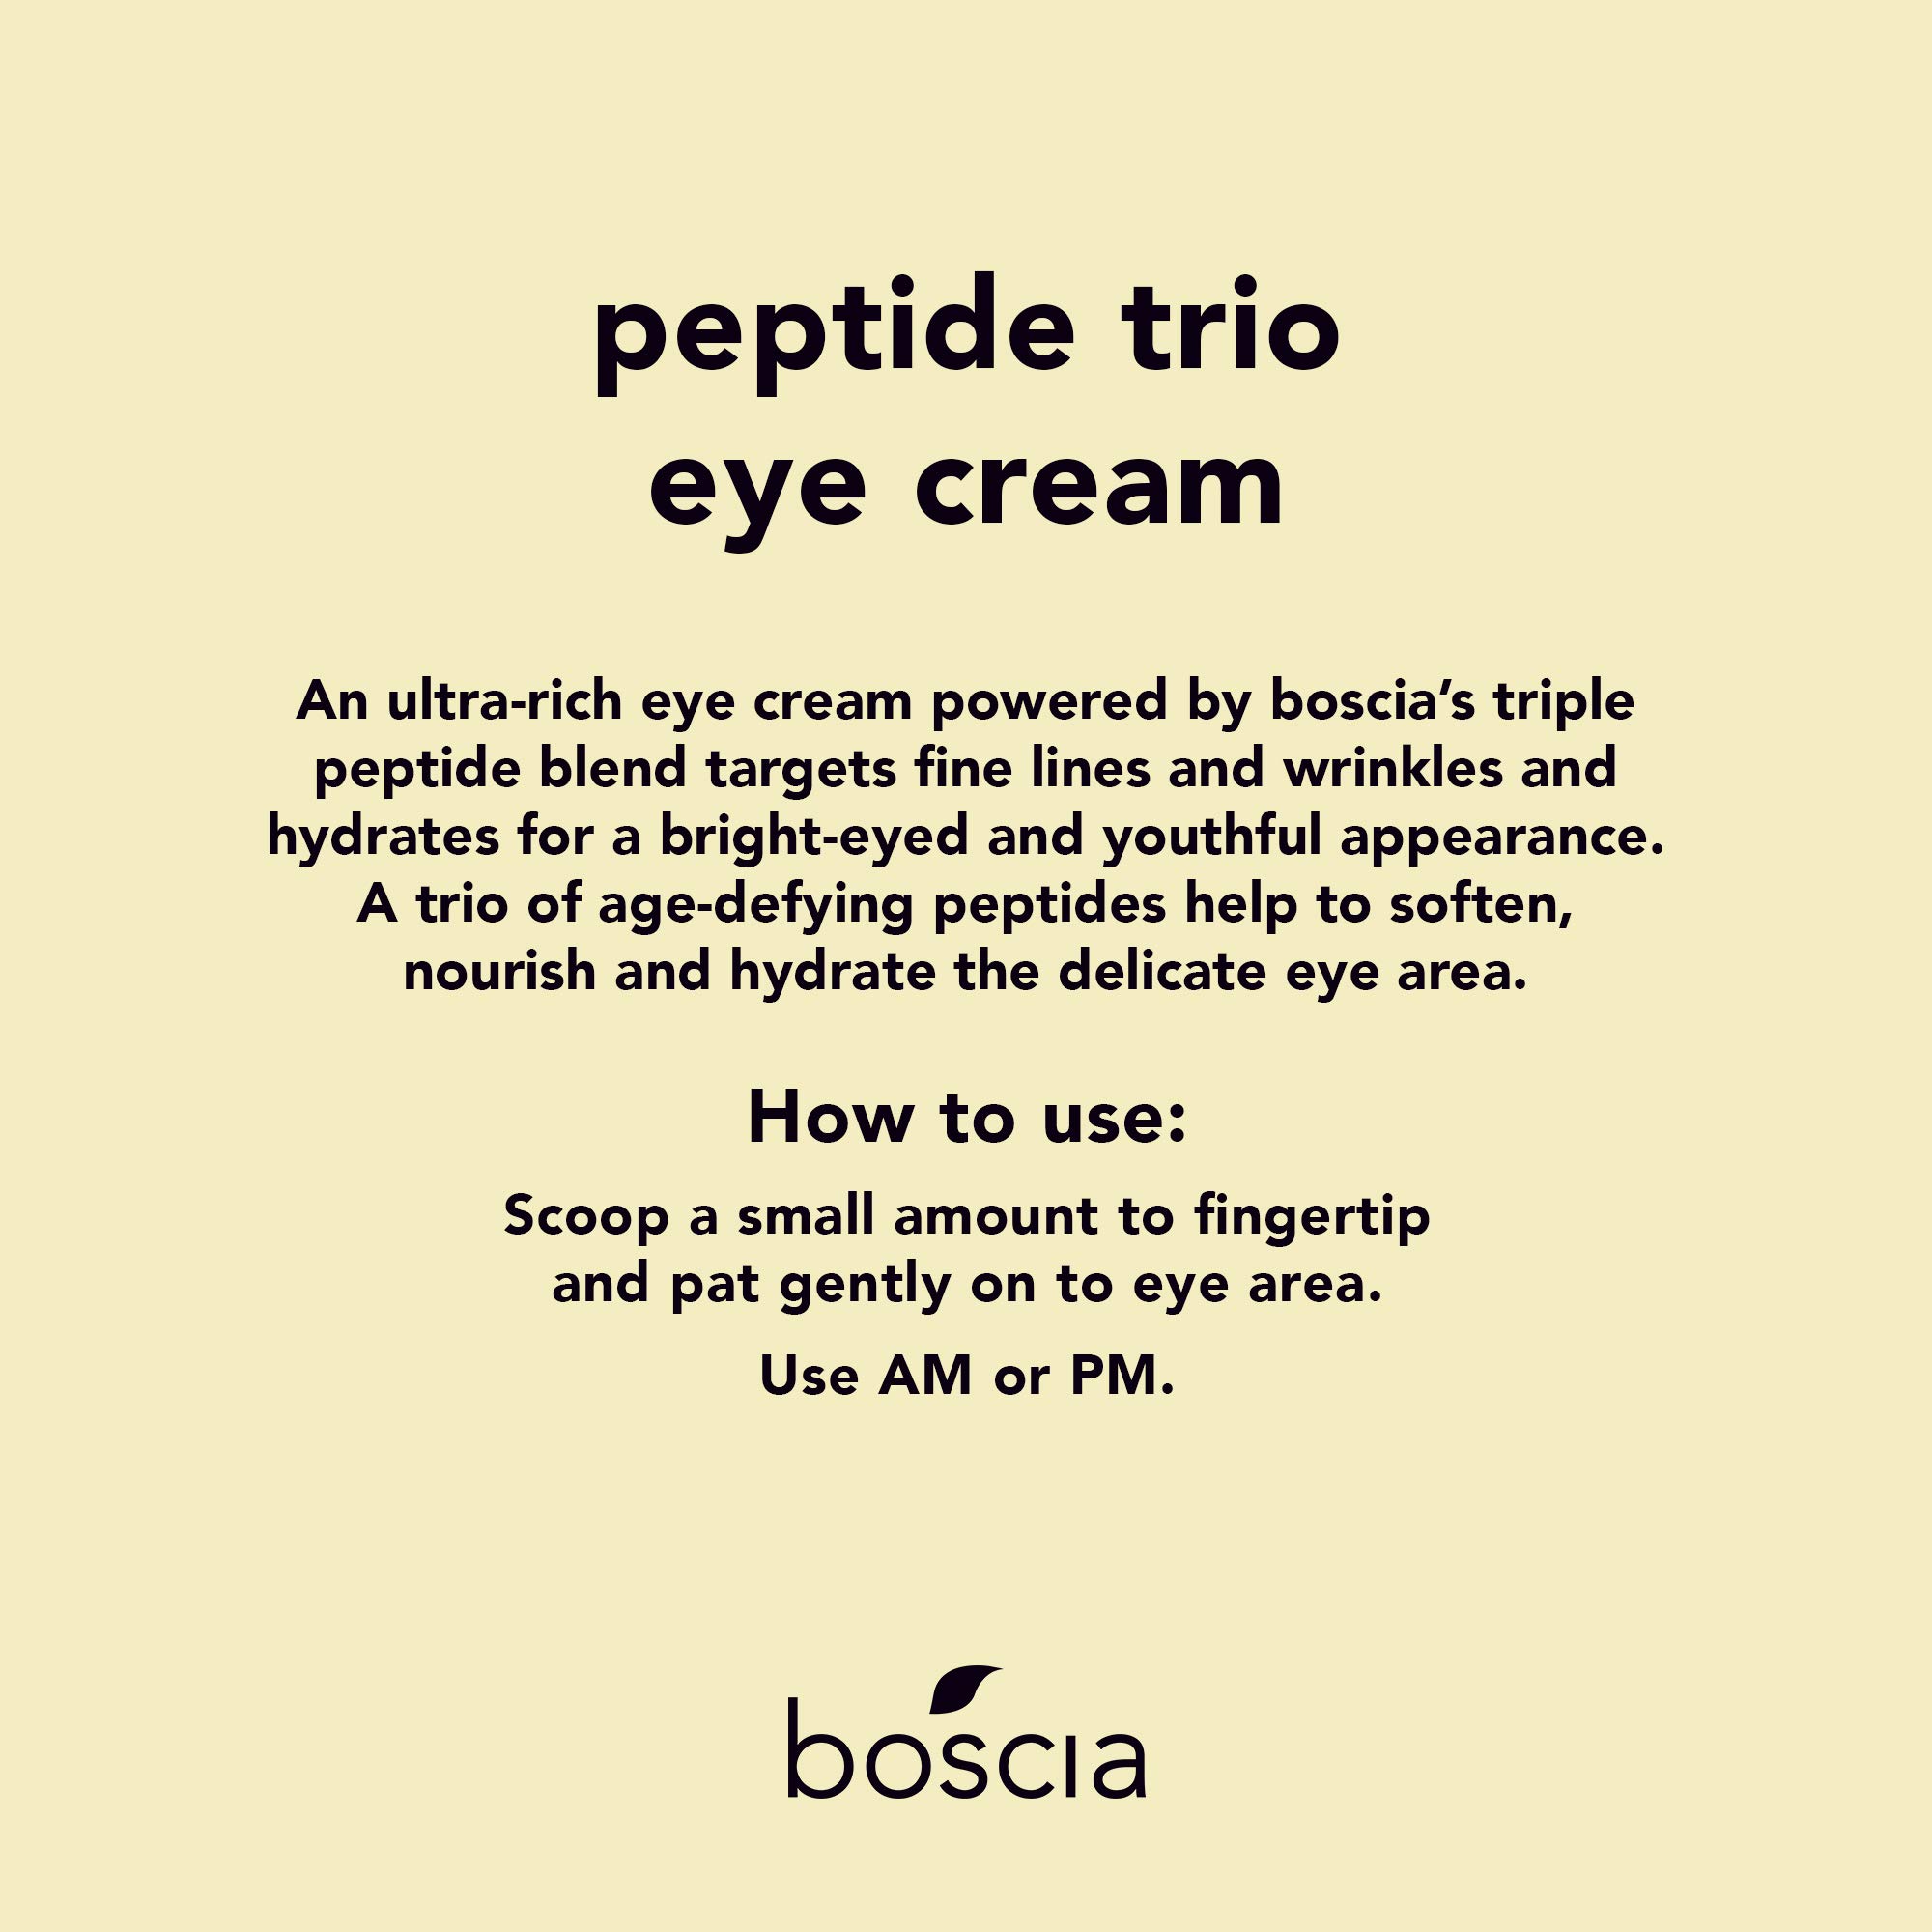 boscia Peptide Trio Eye Cream - Vegan, Cruelty-Free, Natural and Clean Skincare | Age-Defying Eye Cream with Peptide Blend and Organic Botanical Oils, 0.51 fl. Oz